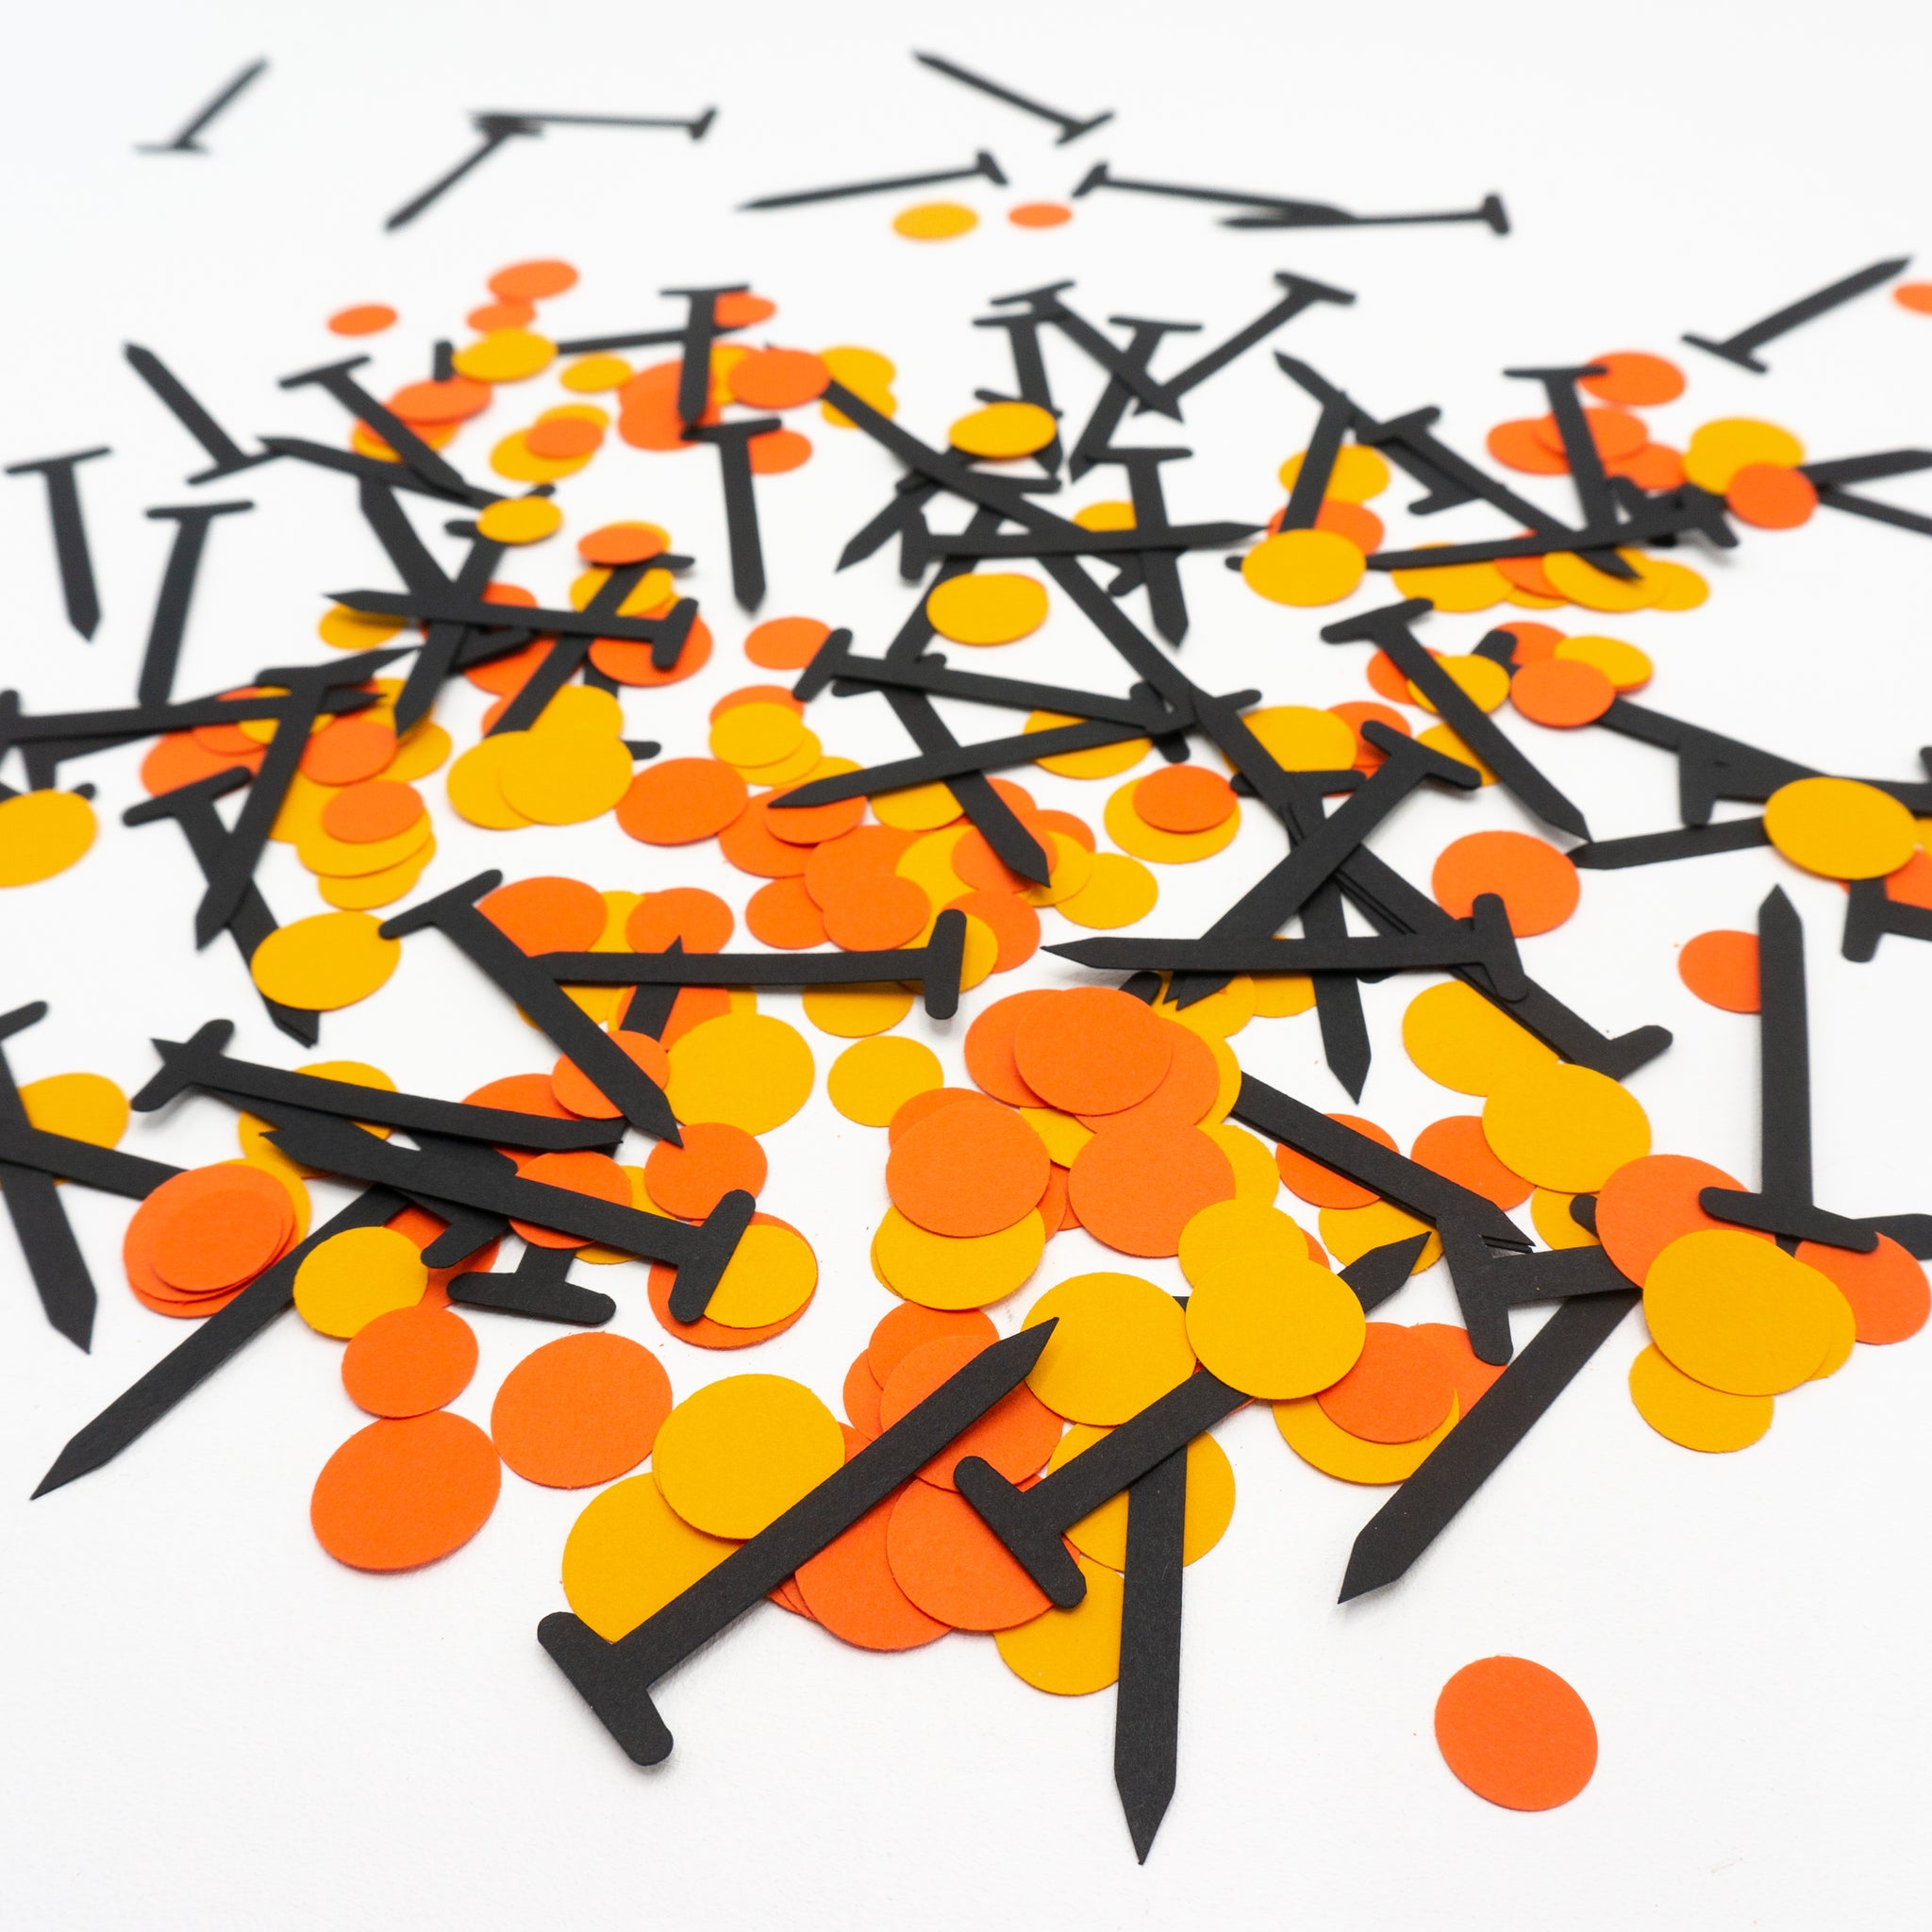 A pile of black confetti nails and orange dots